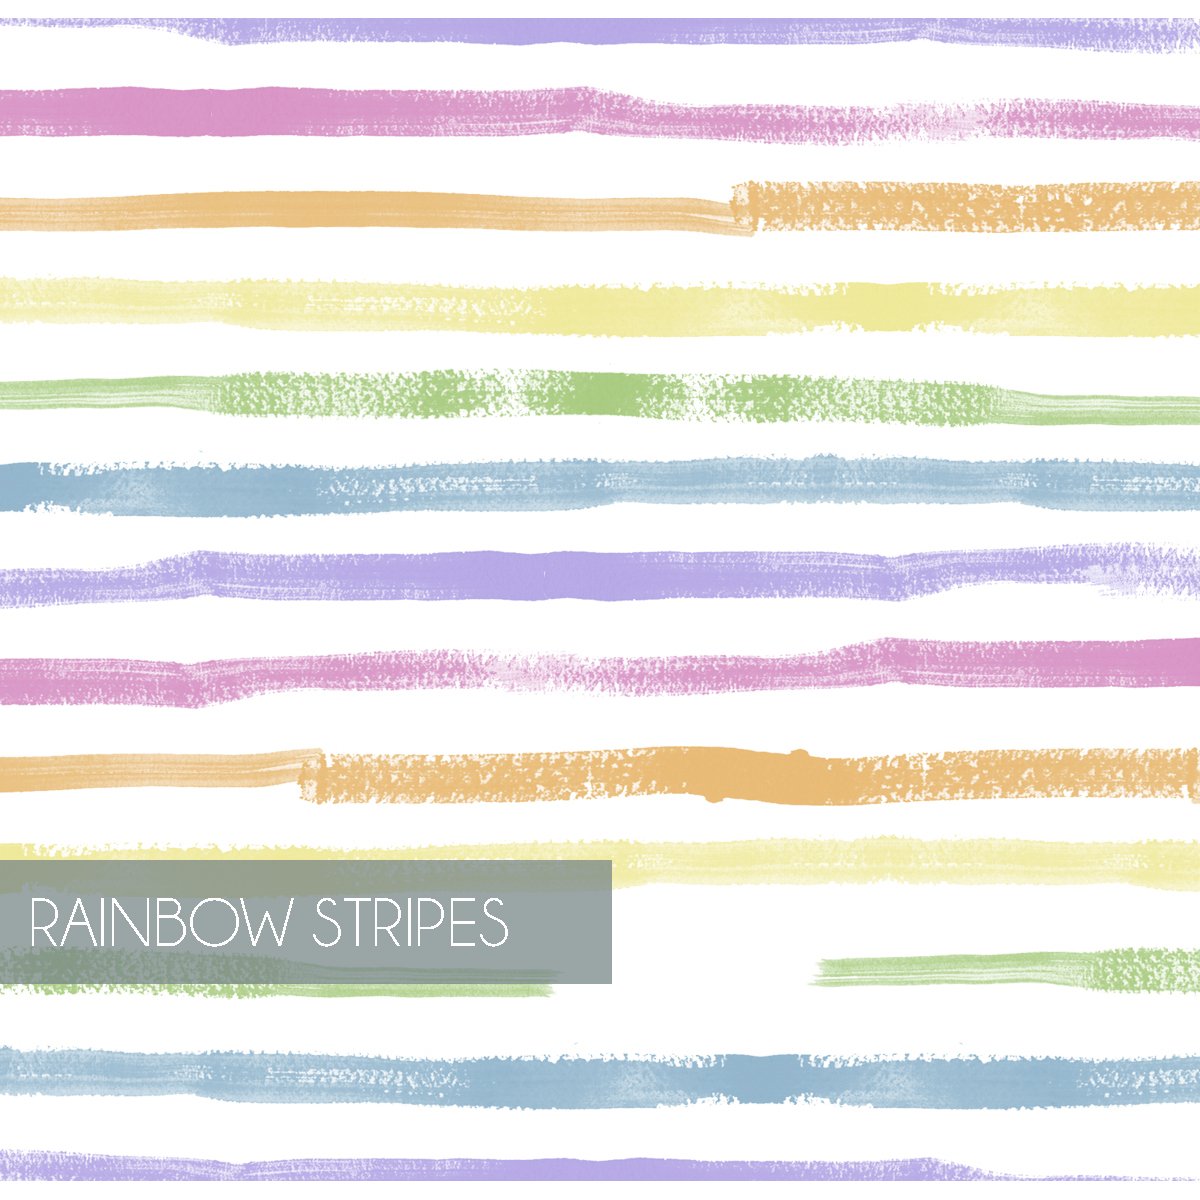 RainbowStripes.jpg